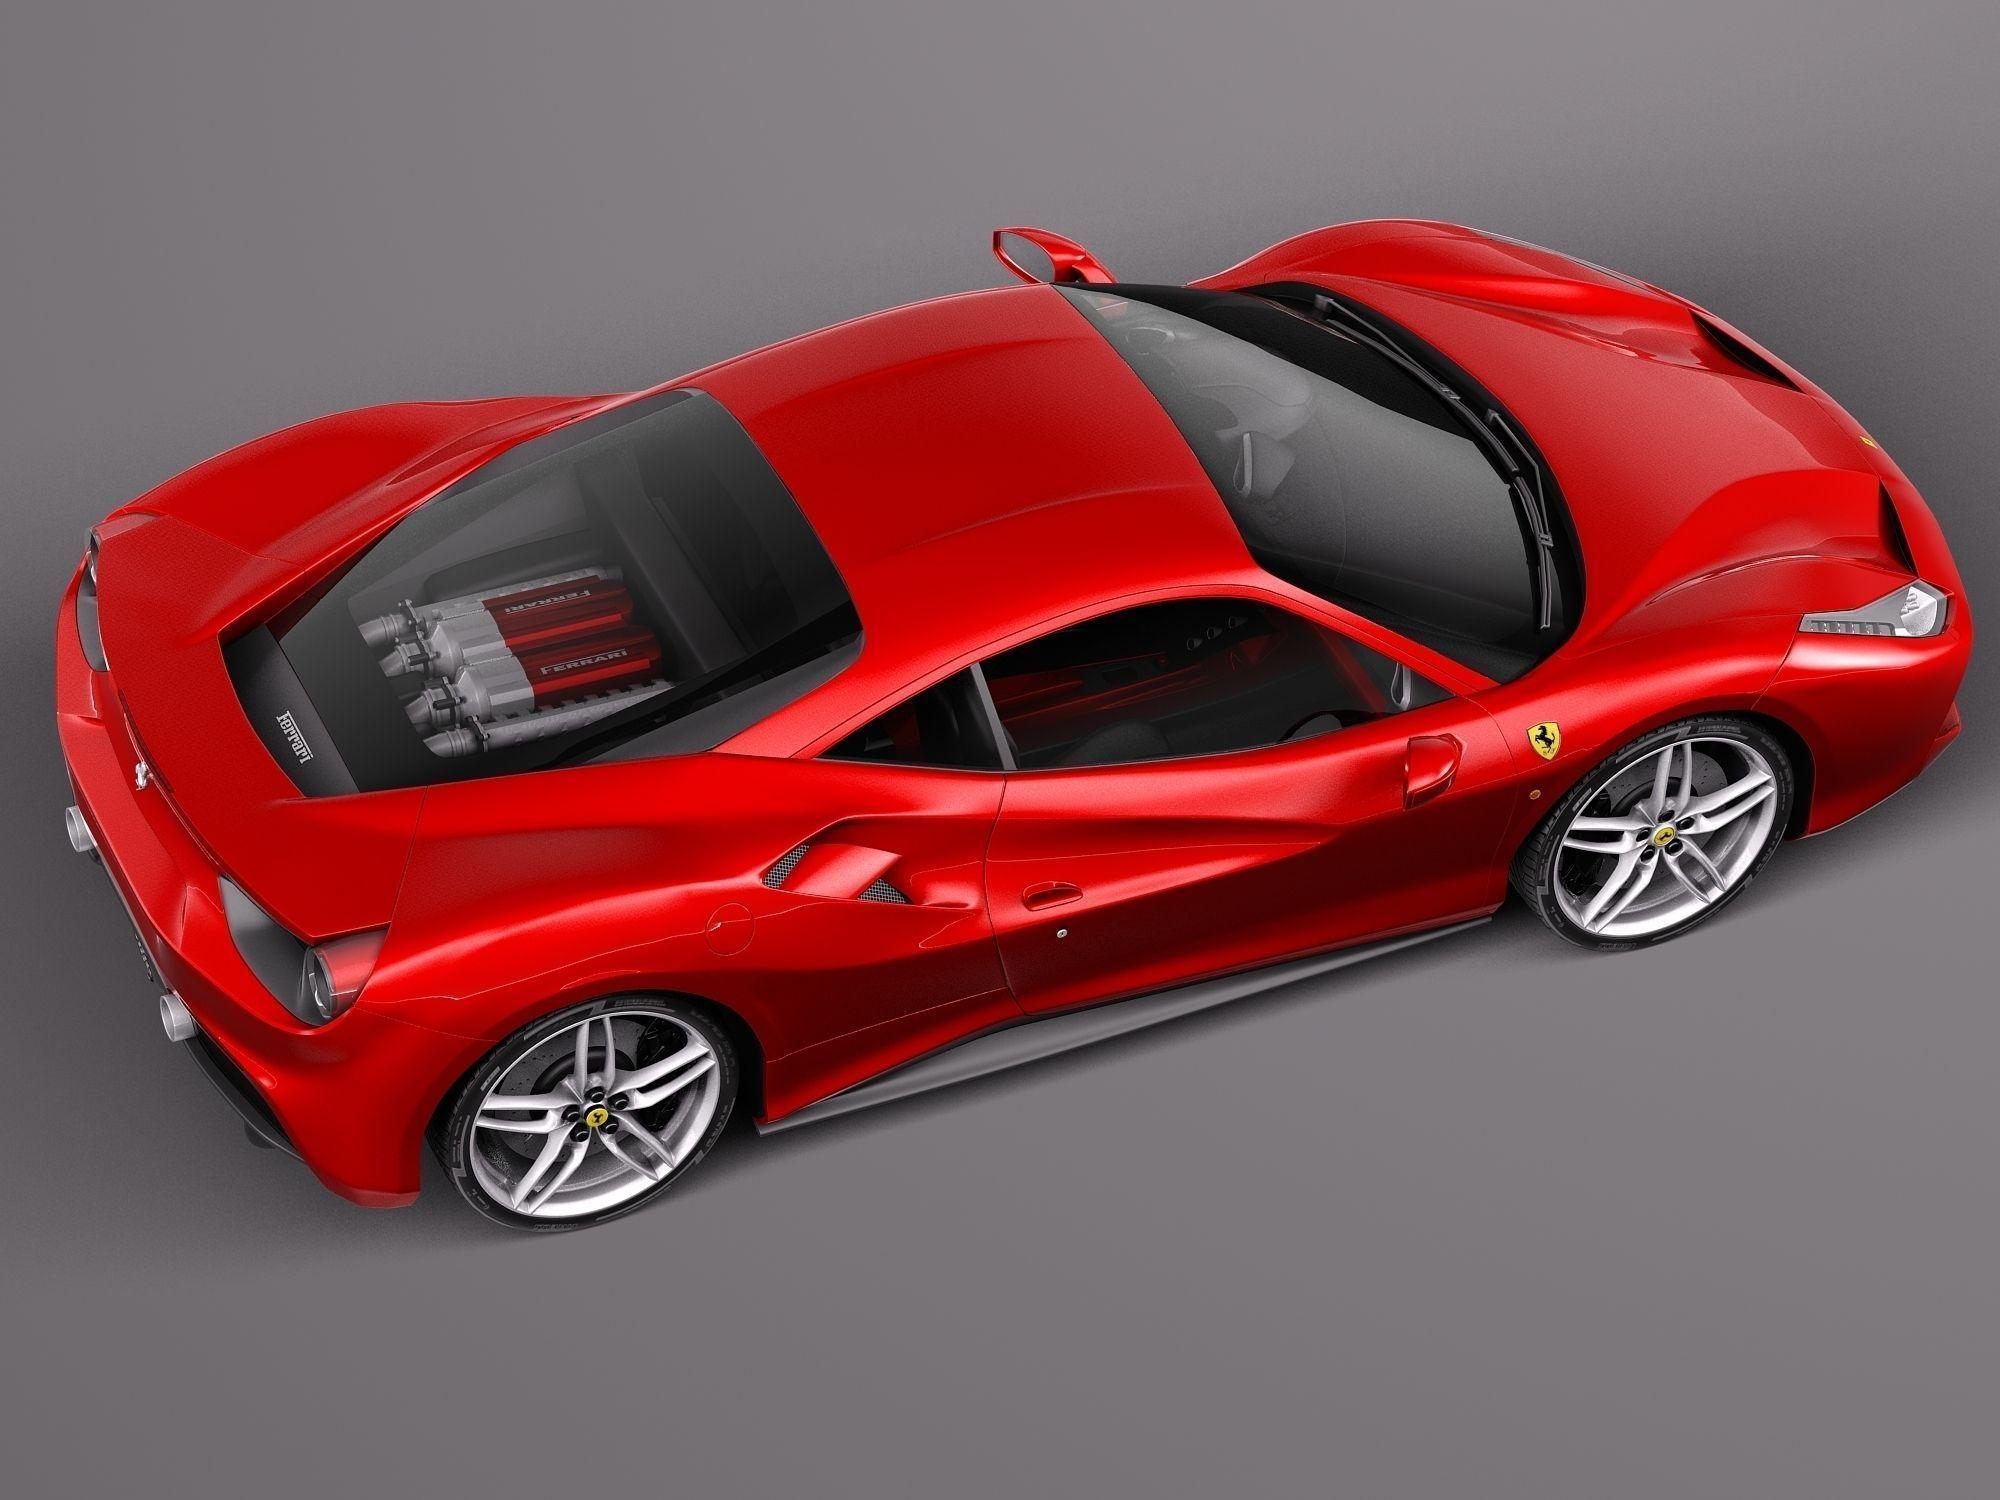 Ferrari 488 GTB HD wallpaper free download